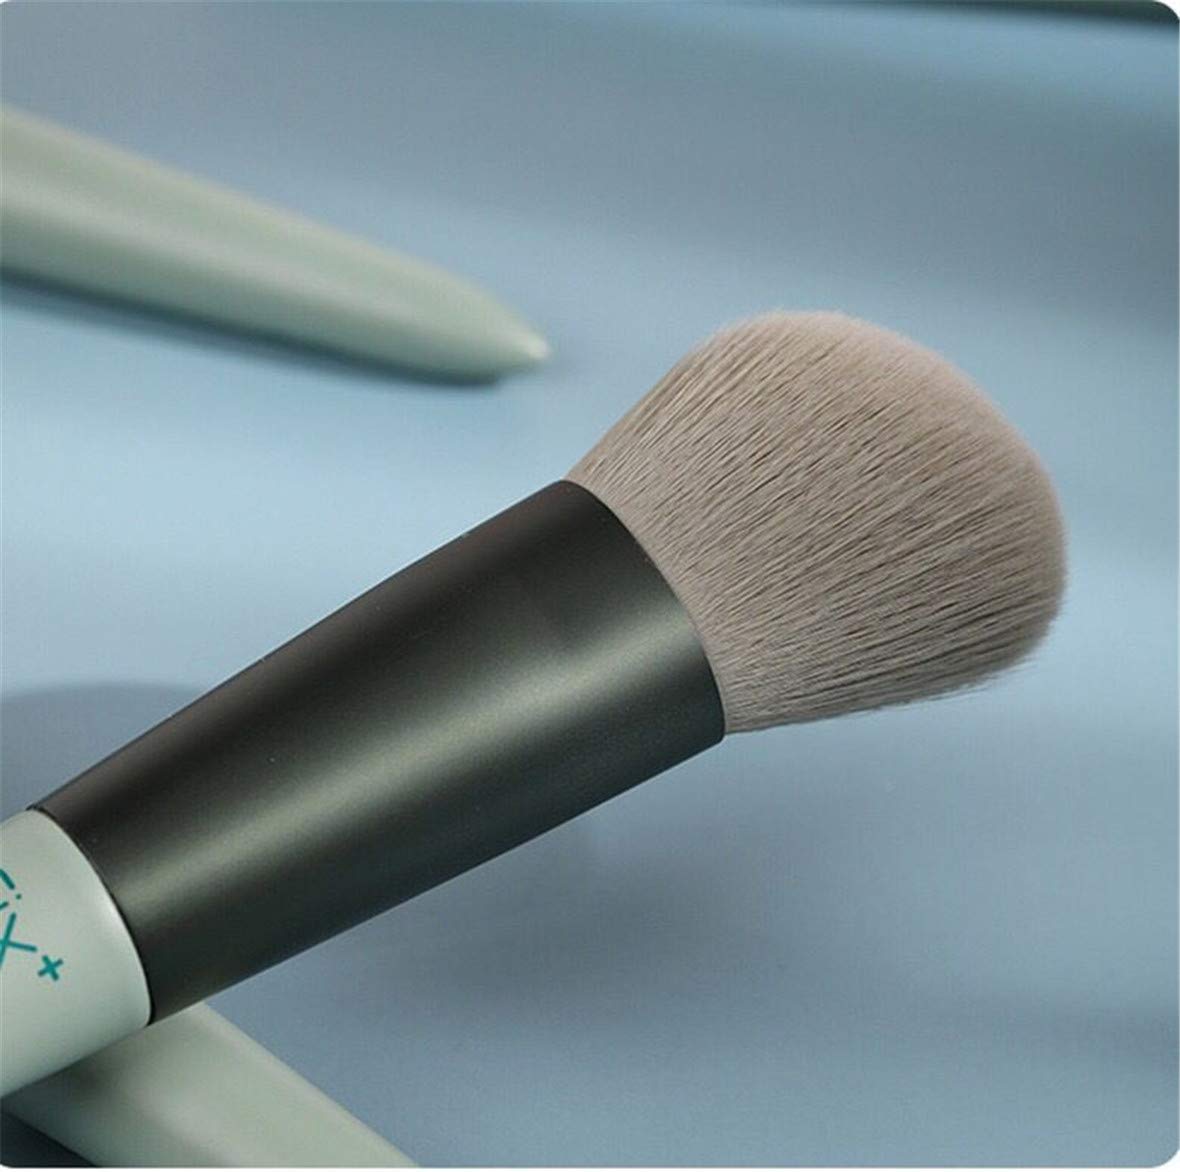 13 Pcs Makeup Brushes Sets Synthetic Foundation Blending Concealer Eye Shadow - BM House & Garden